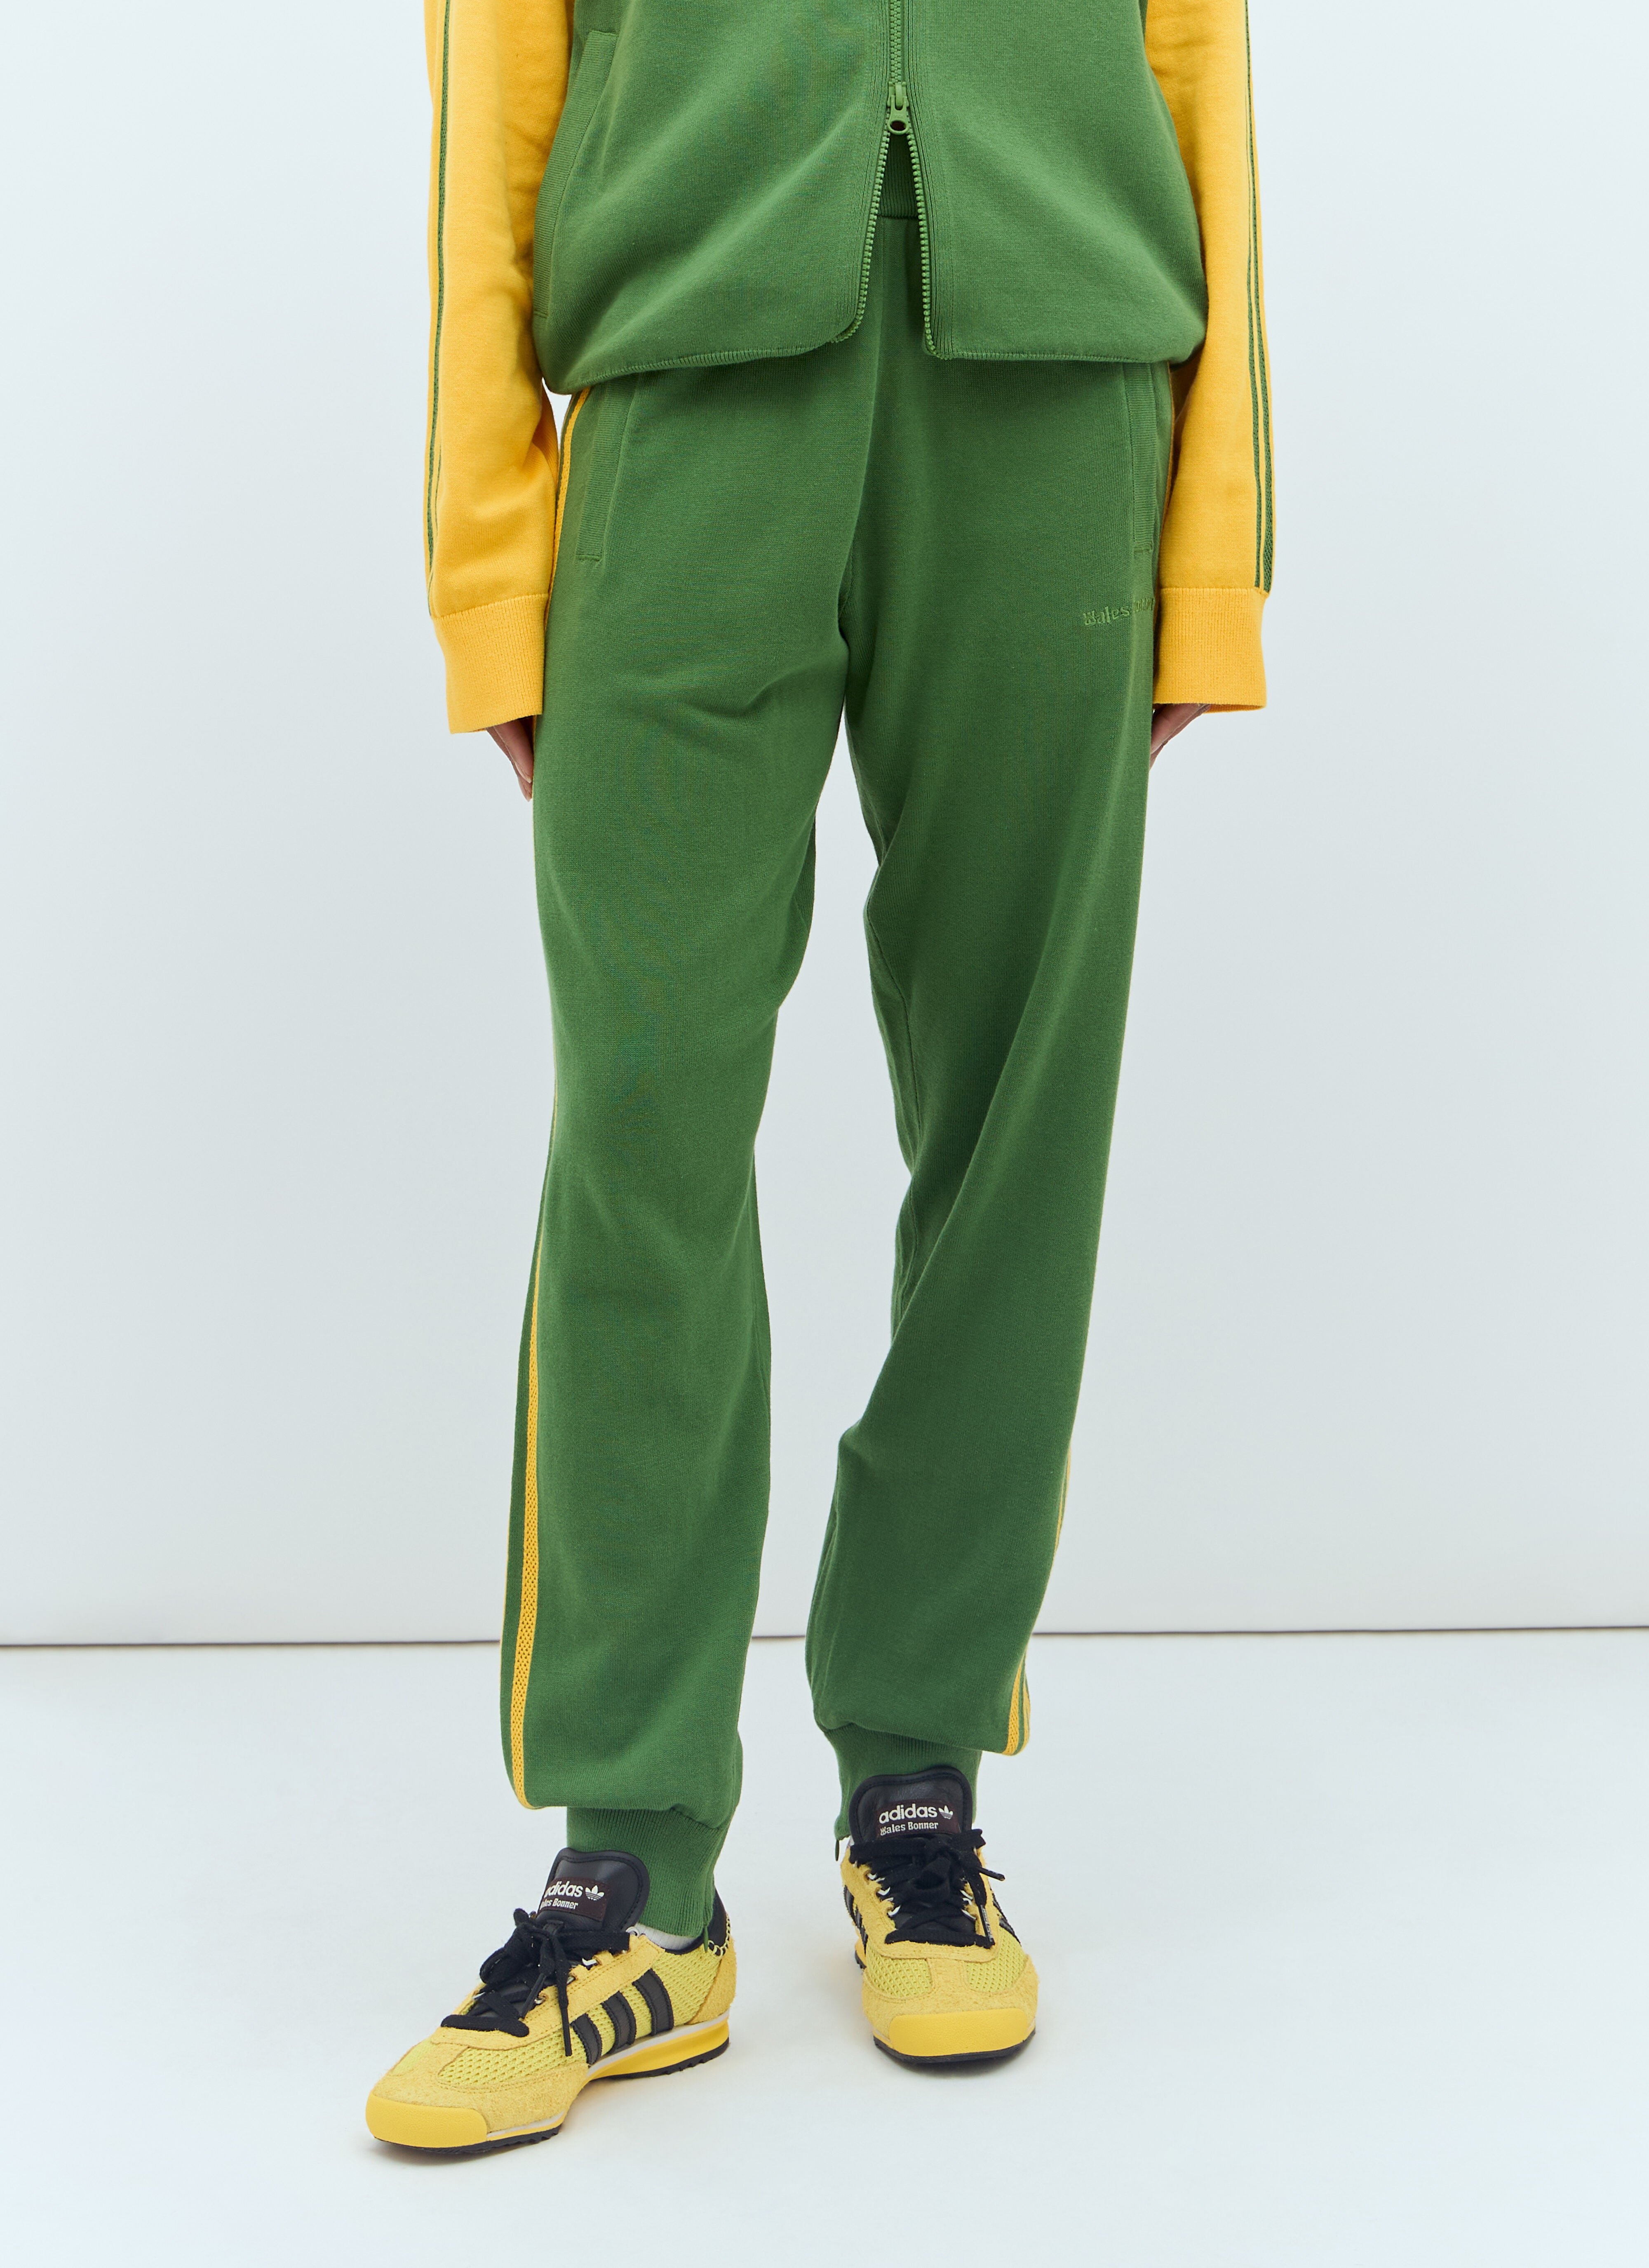 adidas by Wales Bonner Knit Track Pants Green awb0357001